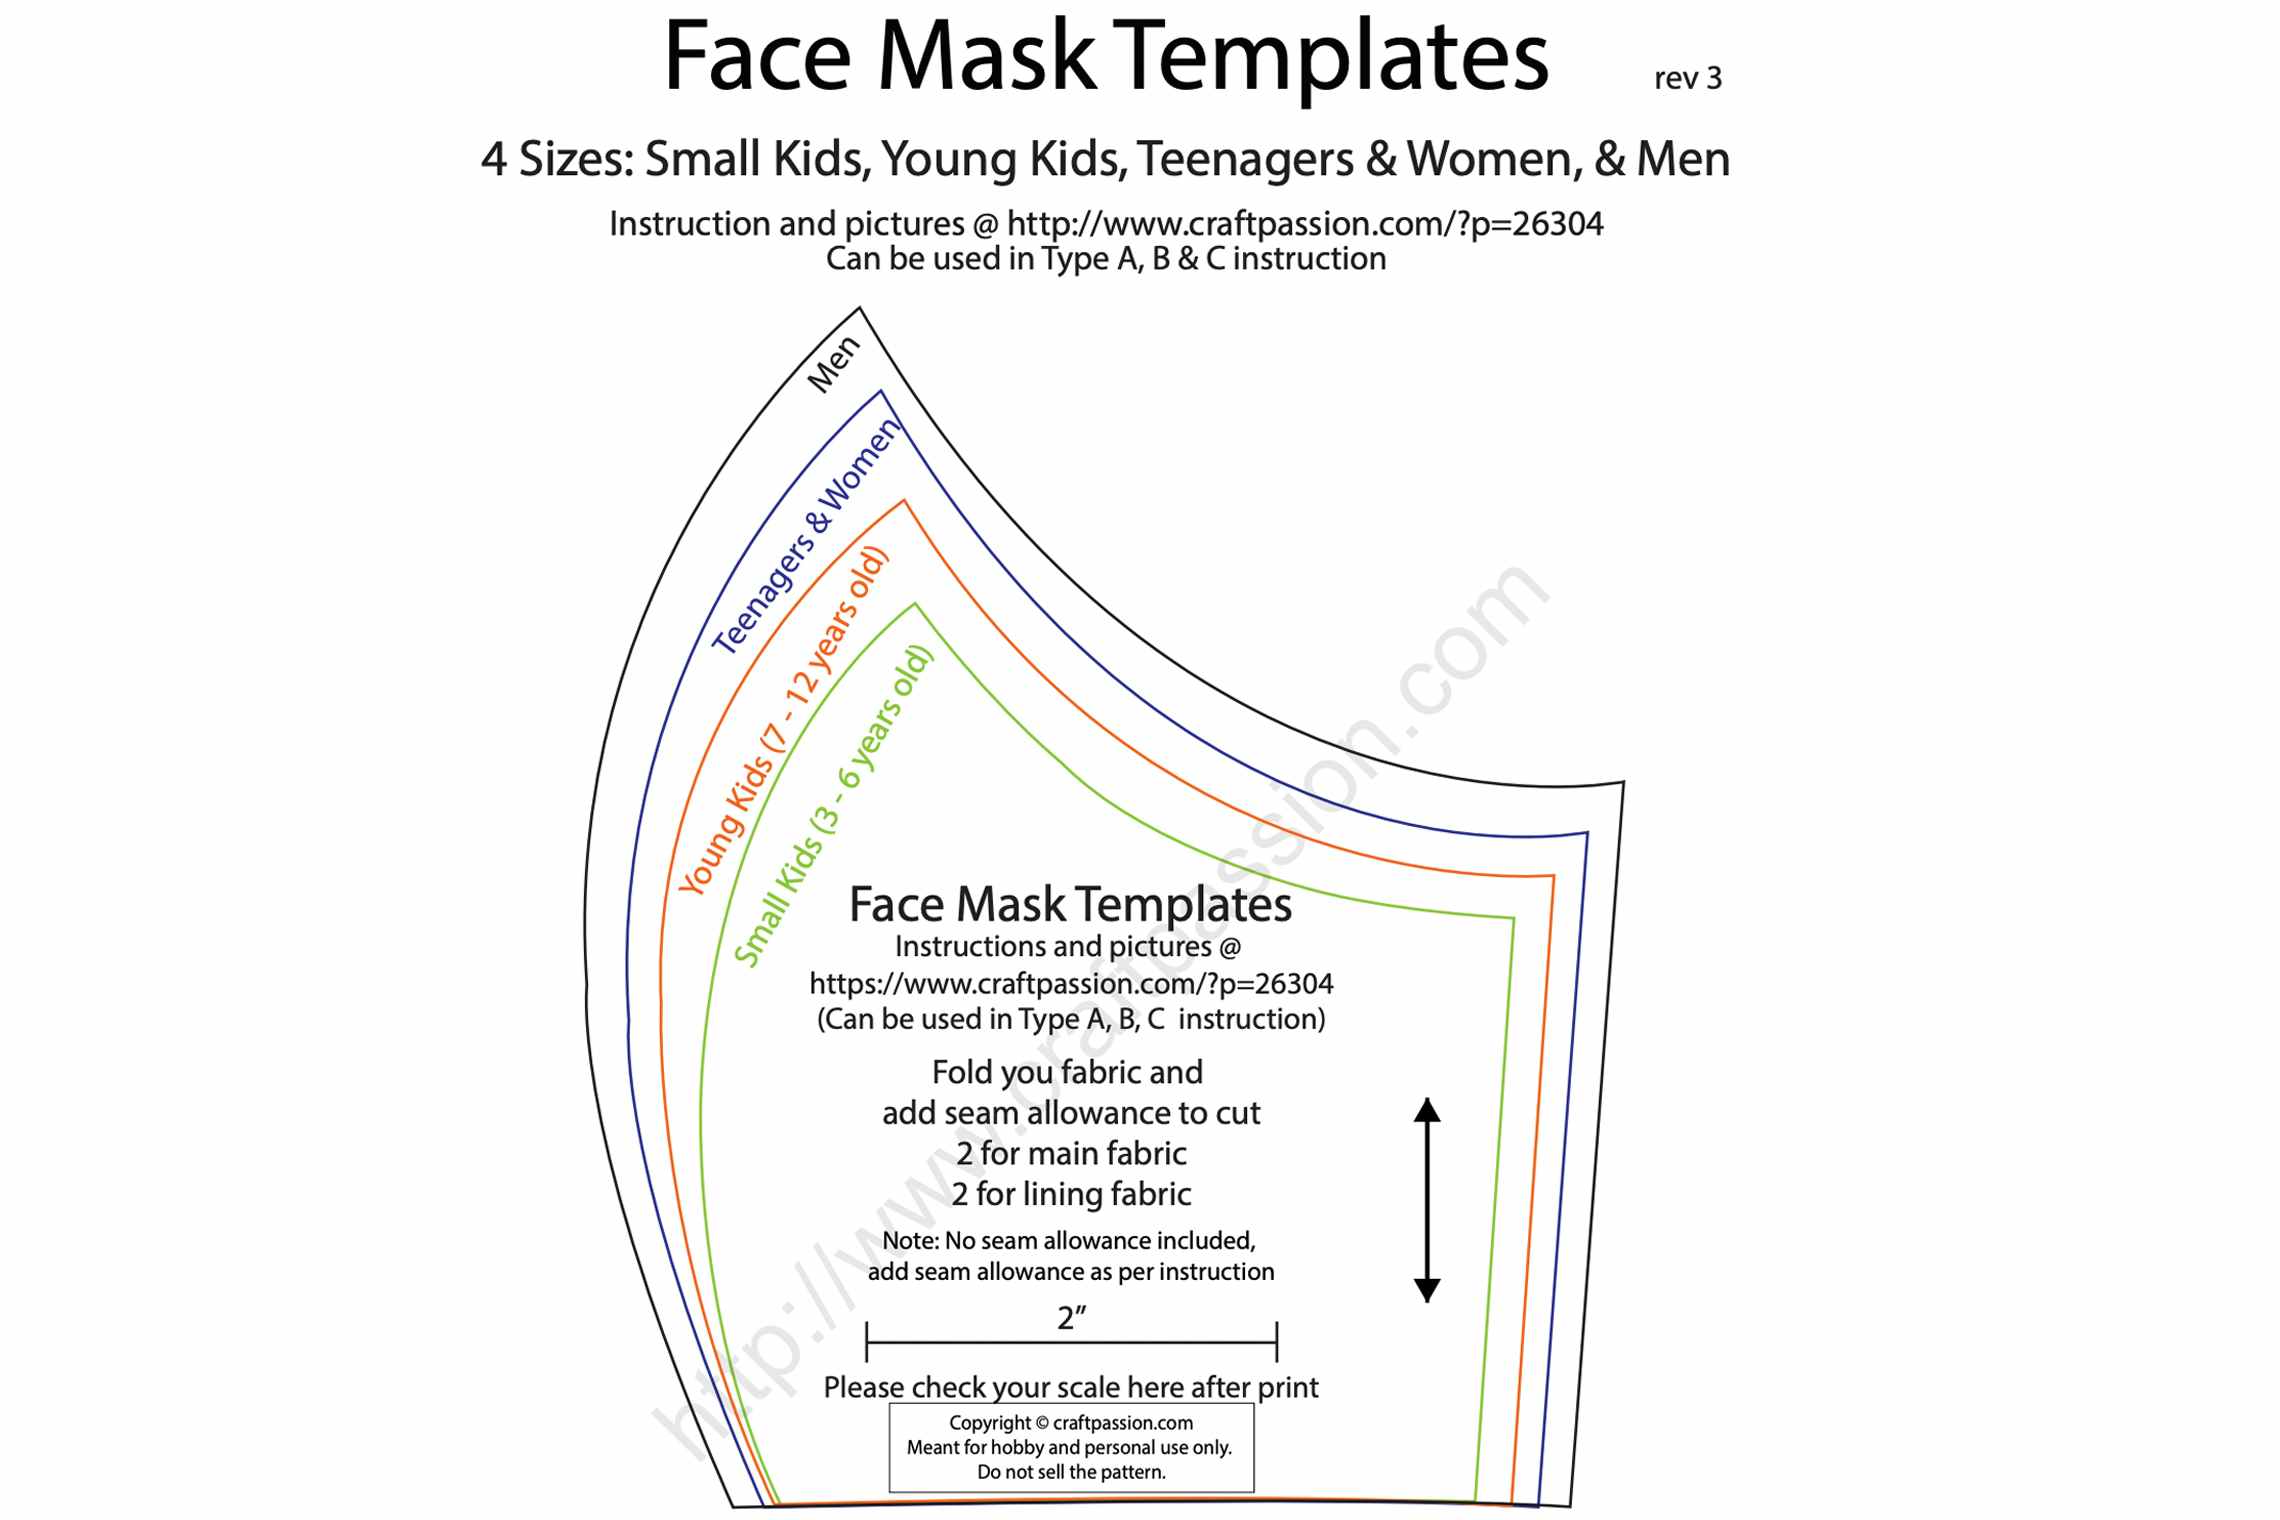 Screenshot of craftpassion.com face mask templates